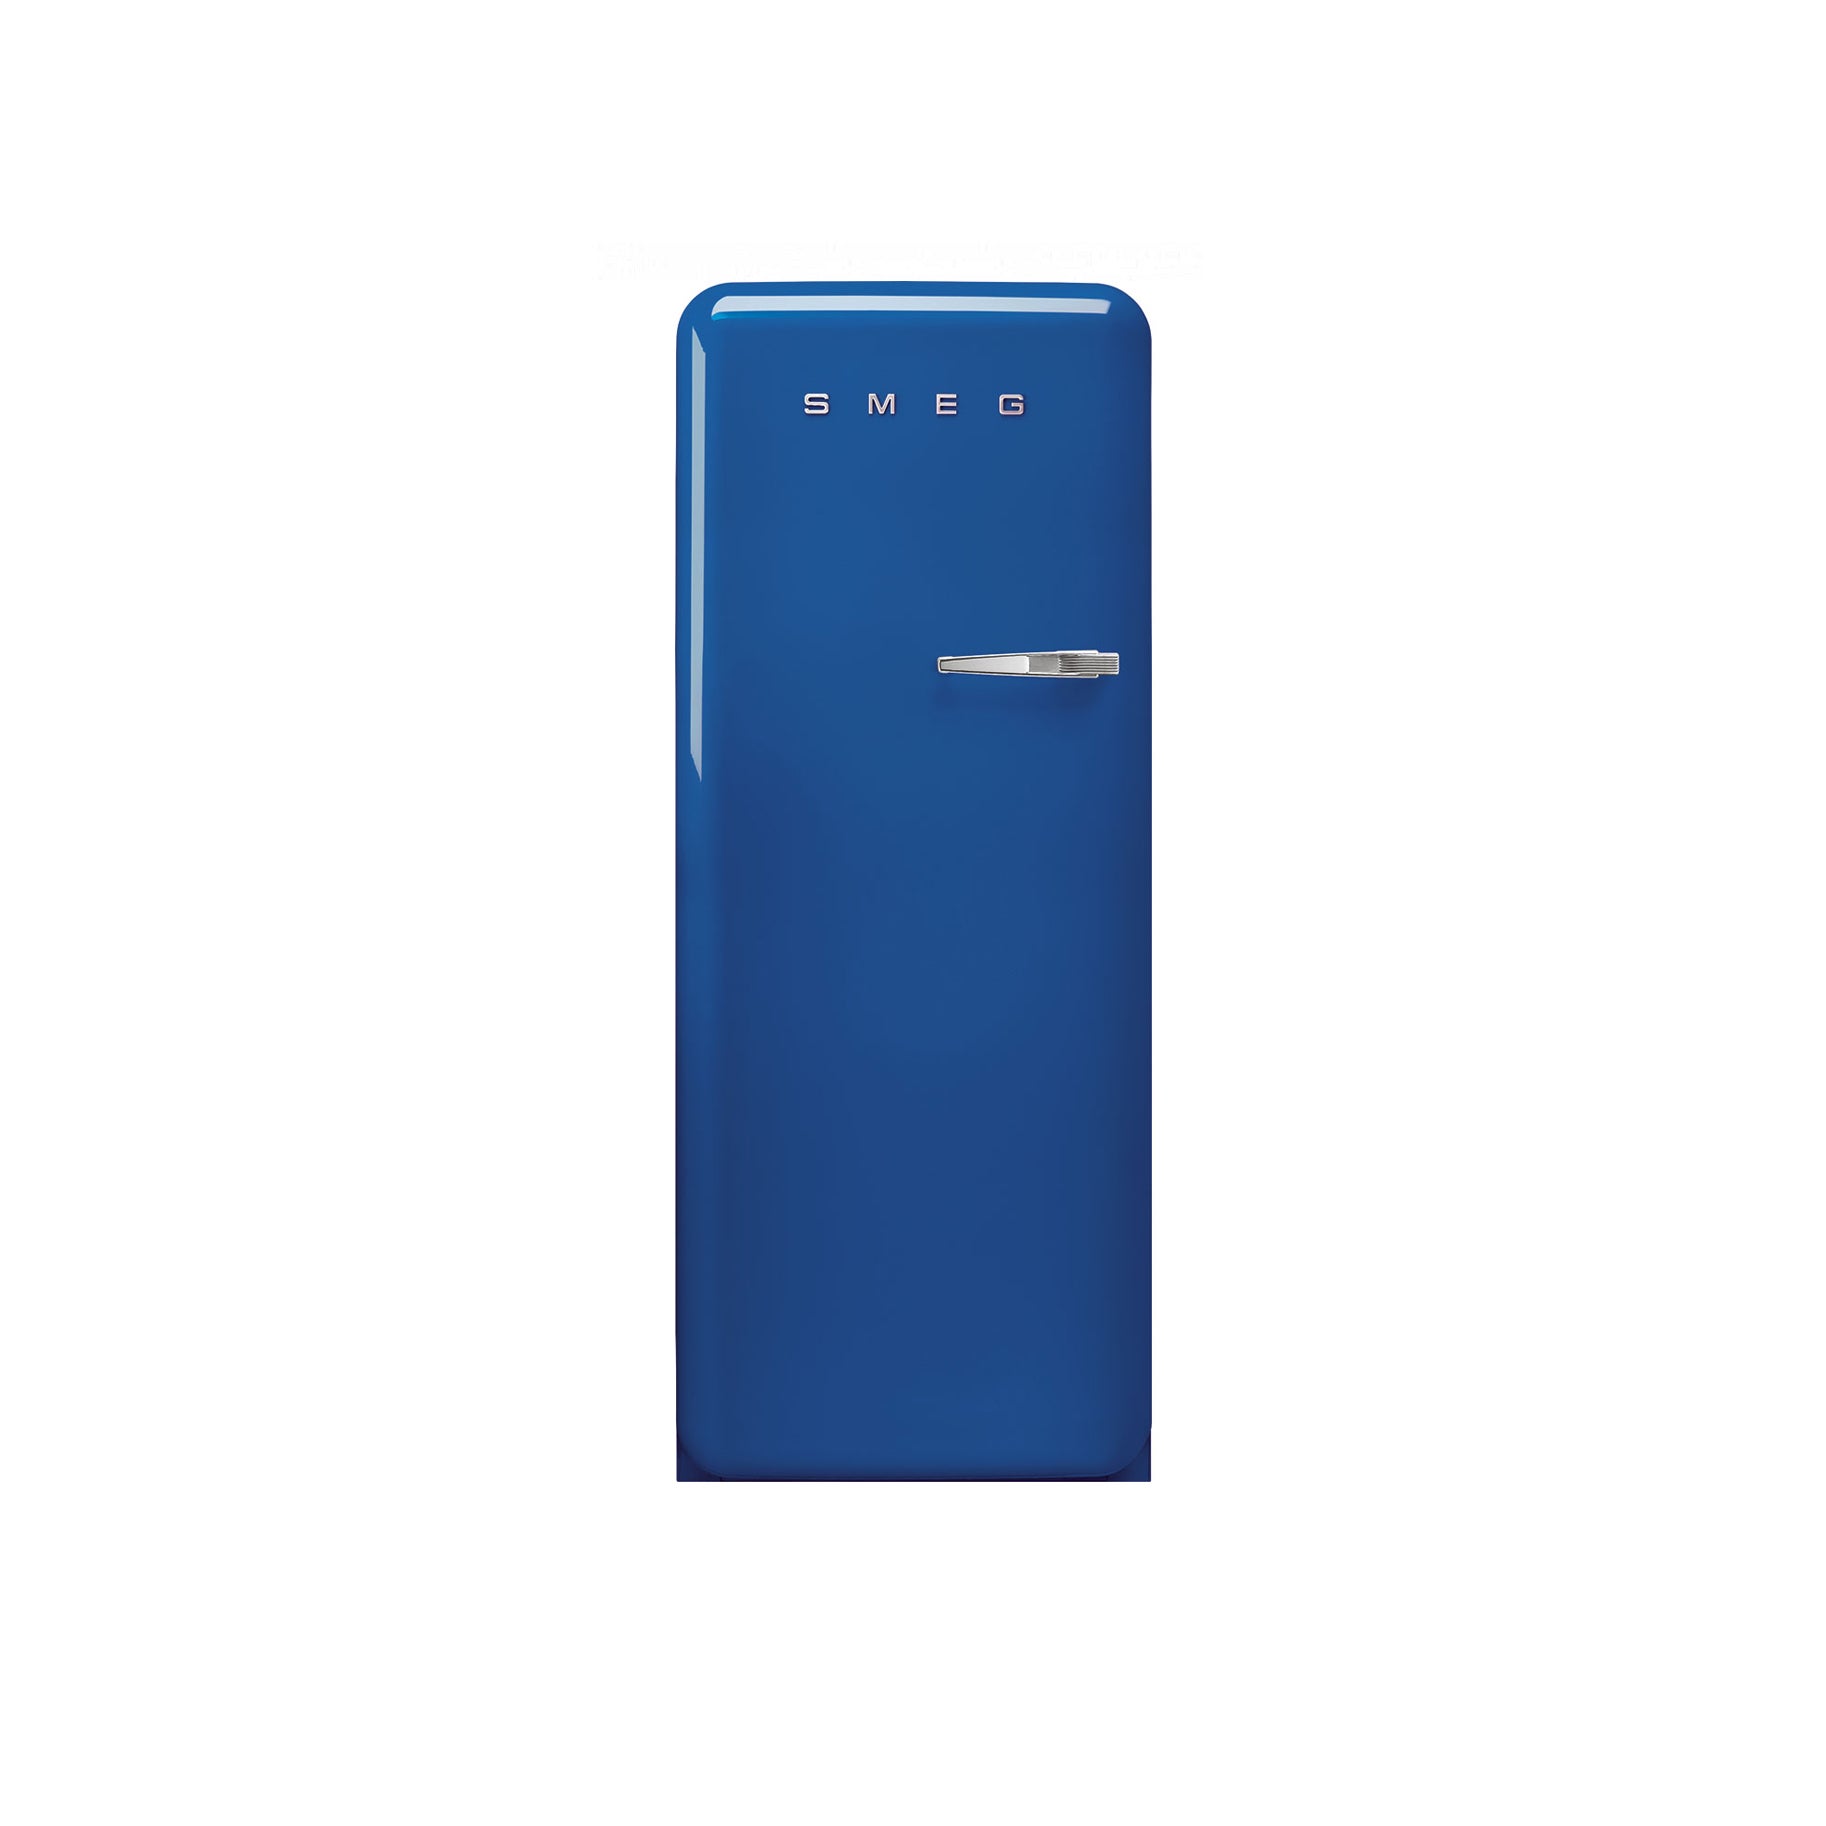 The Best Refrigerator Option: Smeg Retro Style Refrigerator